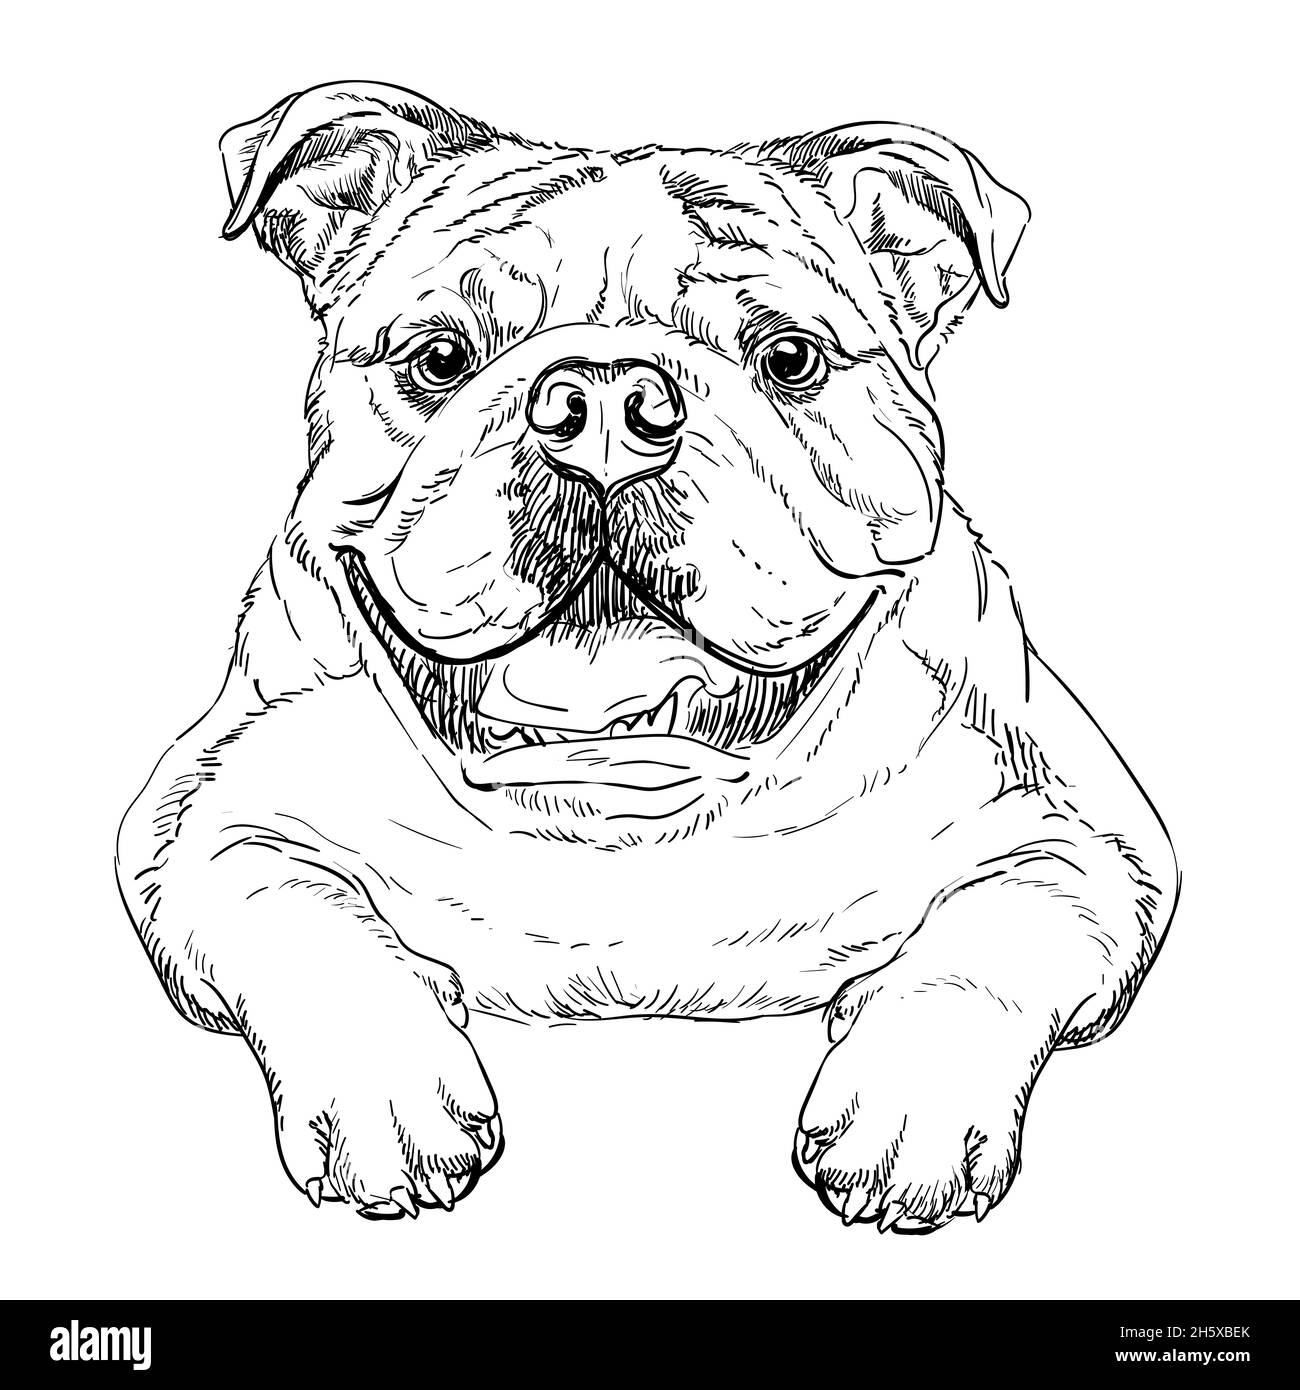 Bulldog drawing black and white stock photos images